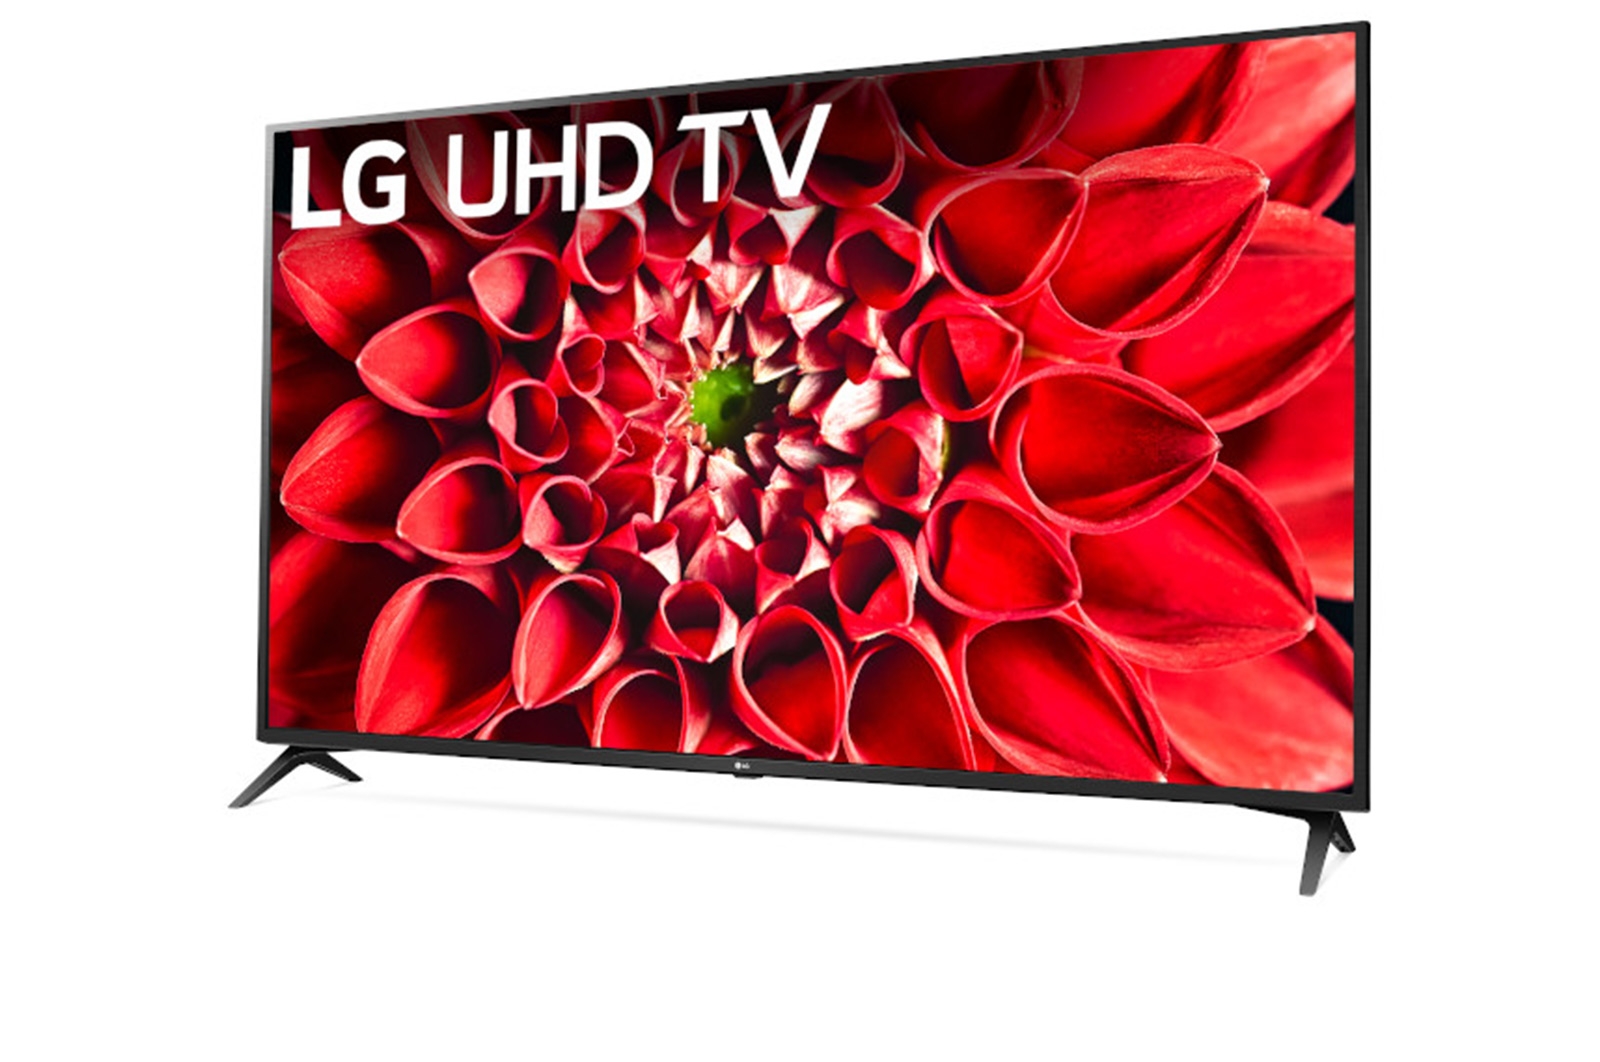 LG UHD 70 Series 70 inch 4K HDR Smart LED TV product image